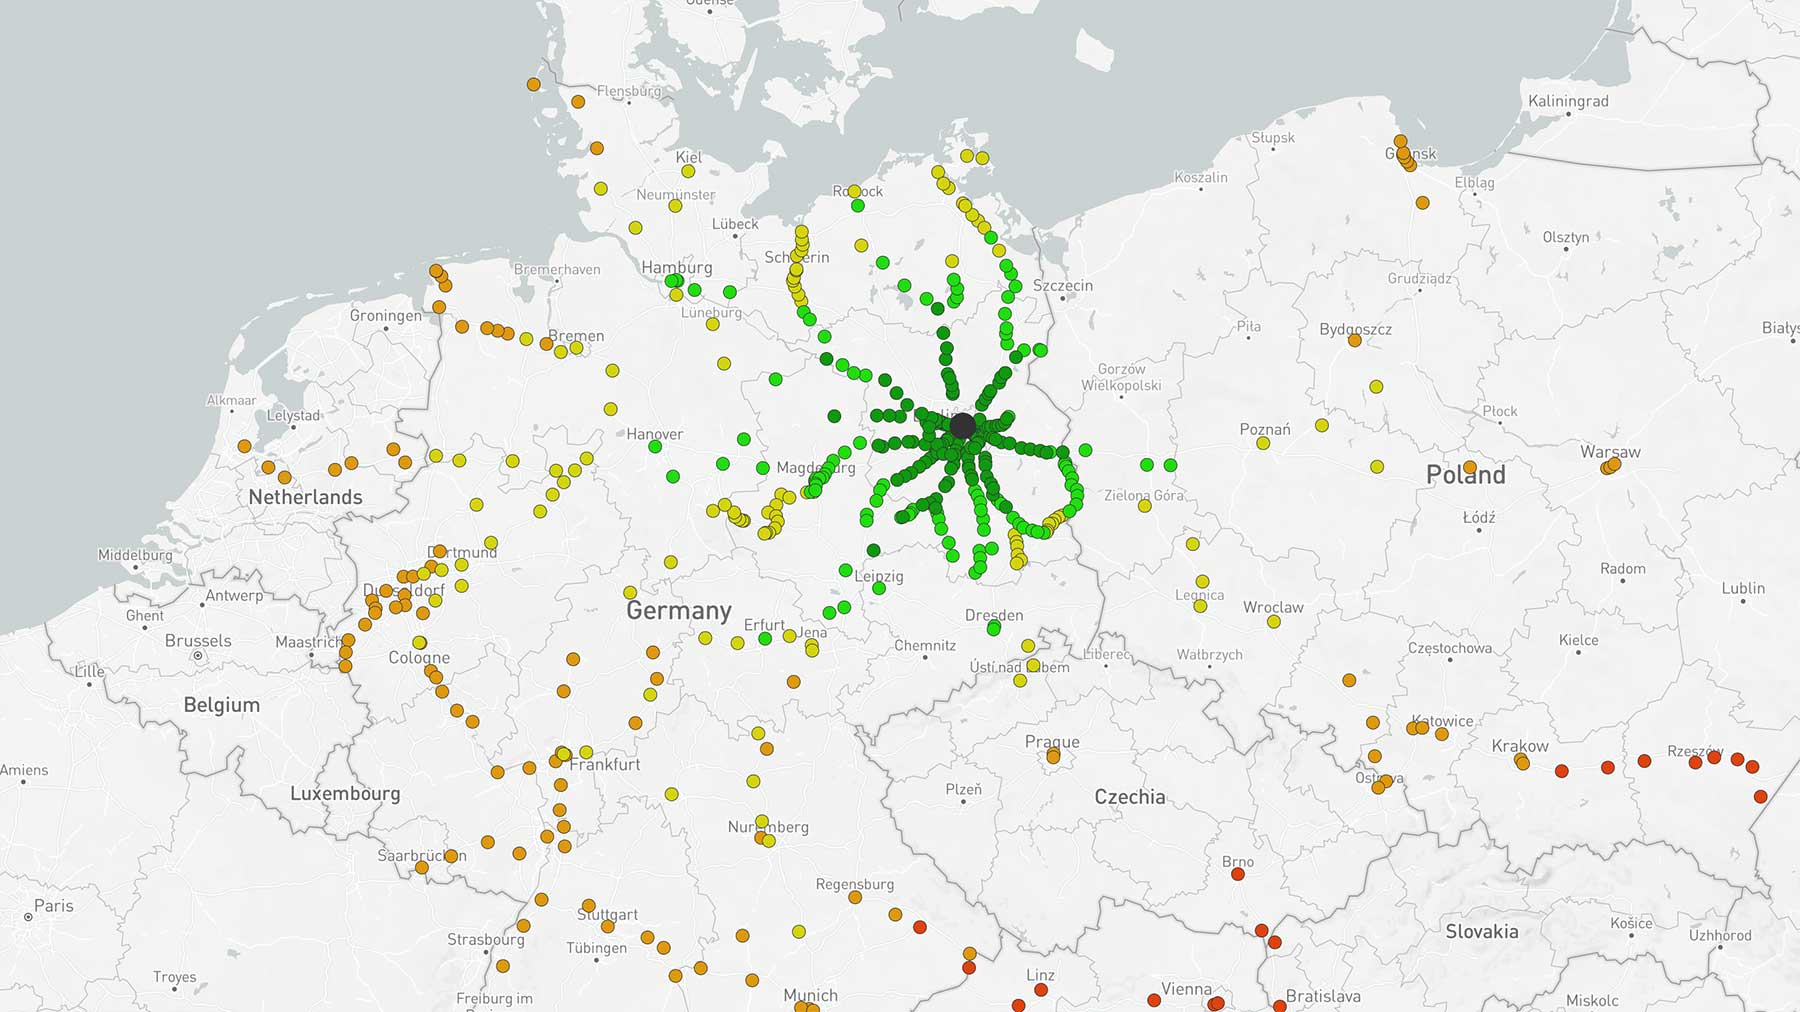 Interaktive Karte zeigt Zug-Direktverbindungen ausgehend von Bahnhöfen zug-direktverbindungen-interaktive-karte 